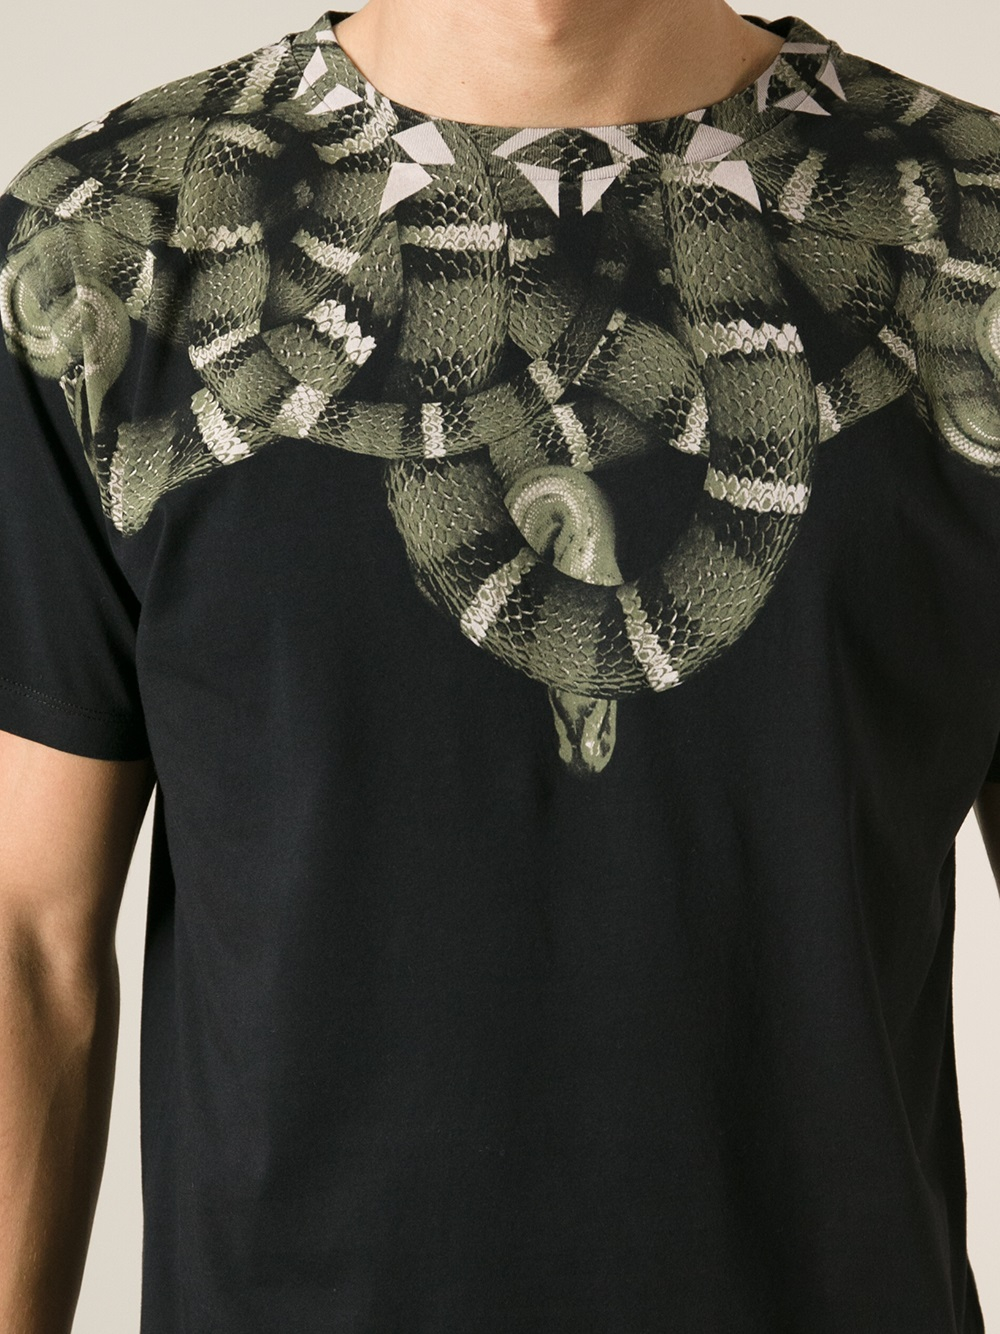 klatre arsenal officiel Marcelo Burlon Snake Print Tshirt in Black for Men - Lyst